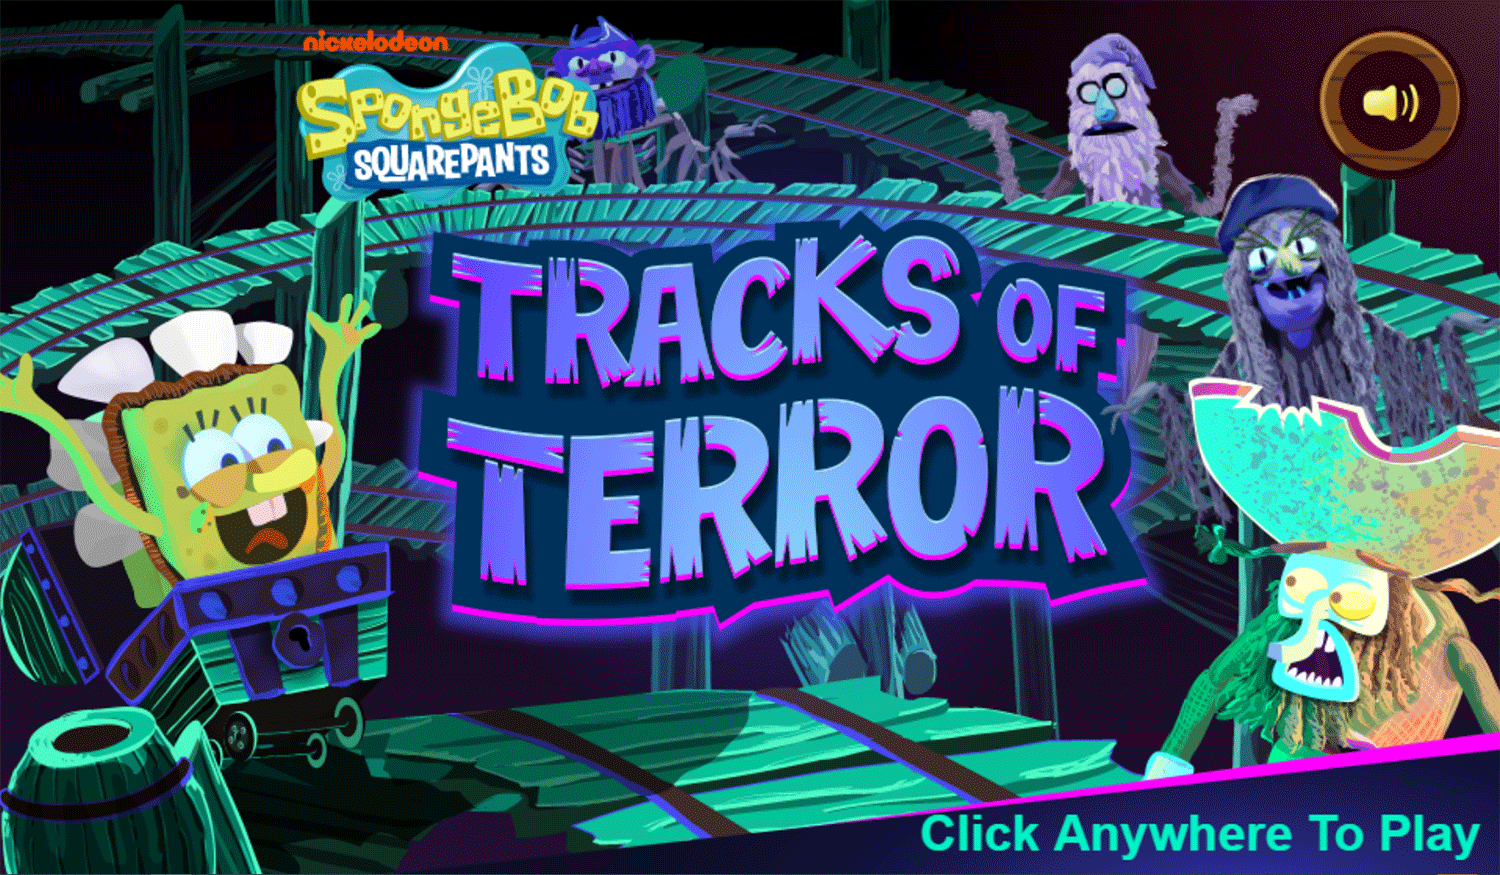 Spongebob Squarepants Tracks of Terror Welcome Screen Screenshot.